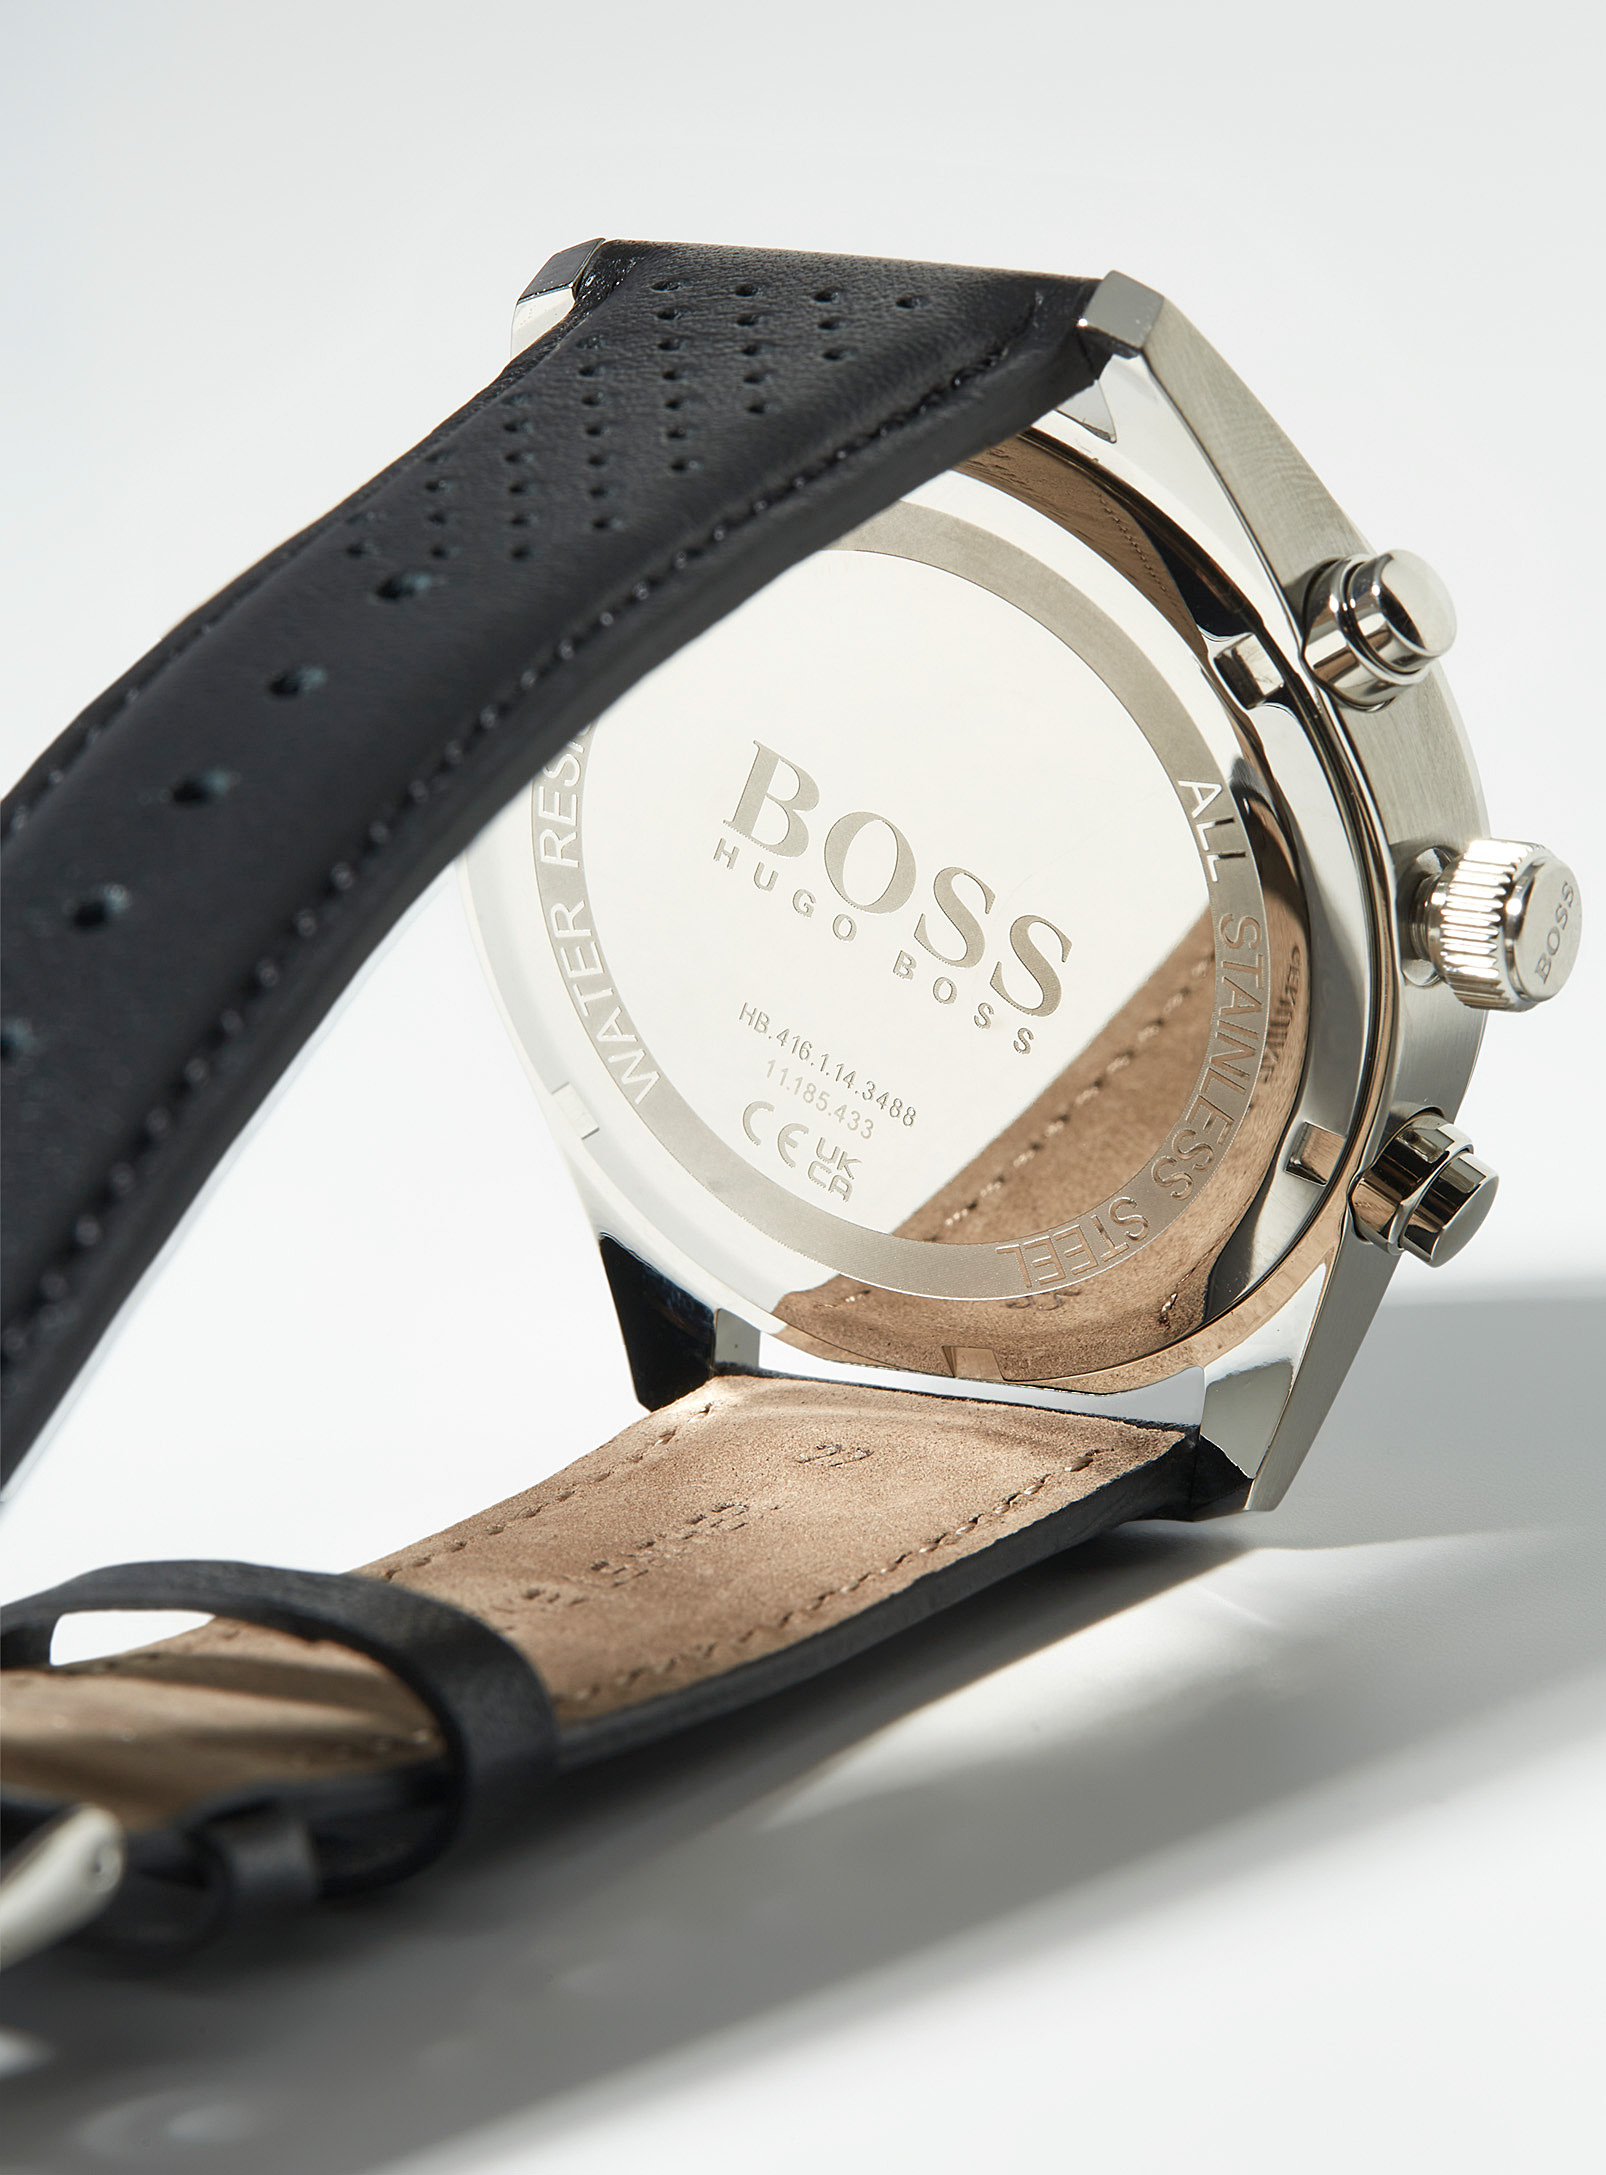 BOSS - La montre chronographe Champion